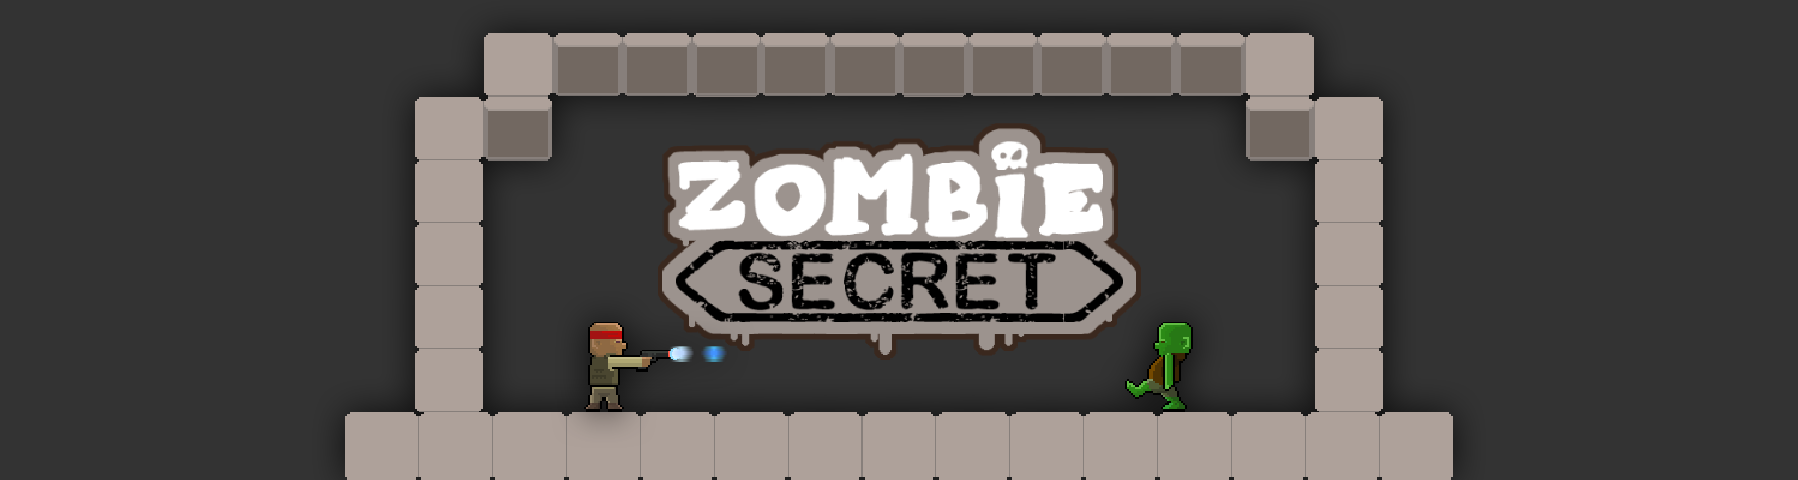 zombieSecret